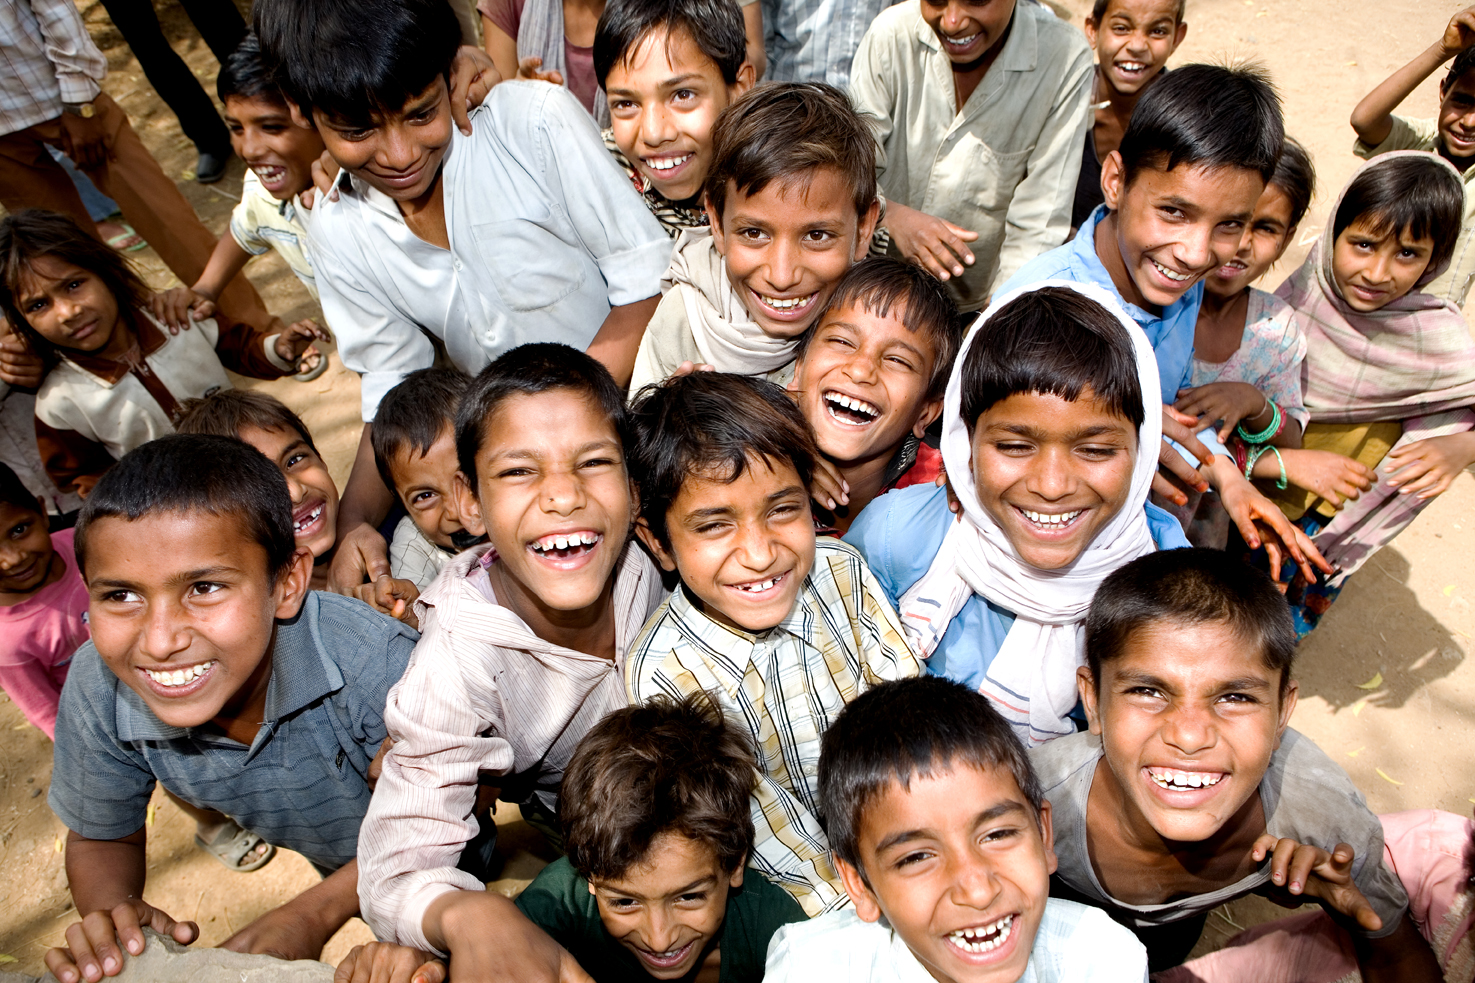 Kailash Satyarthi Children's Foundation